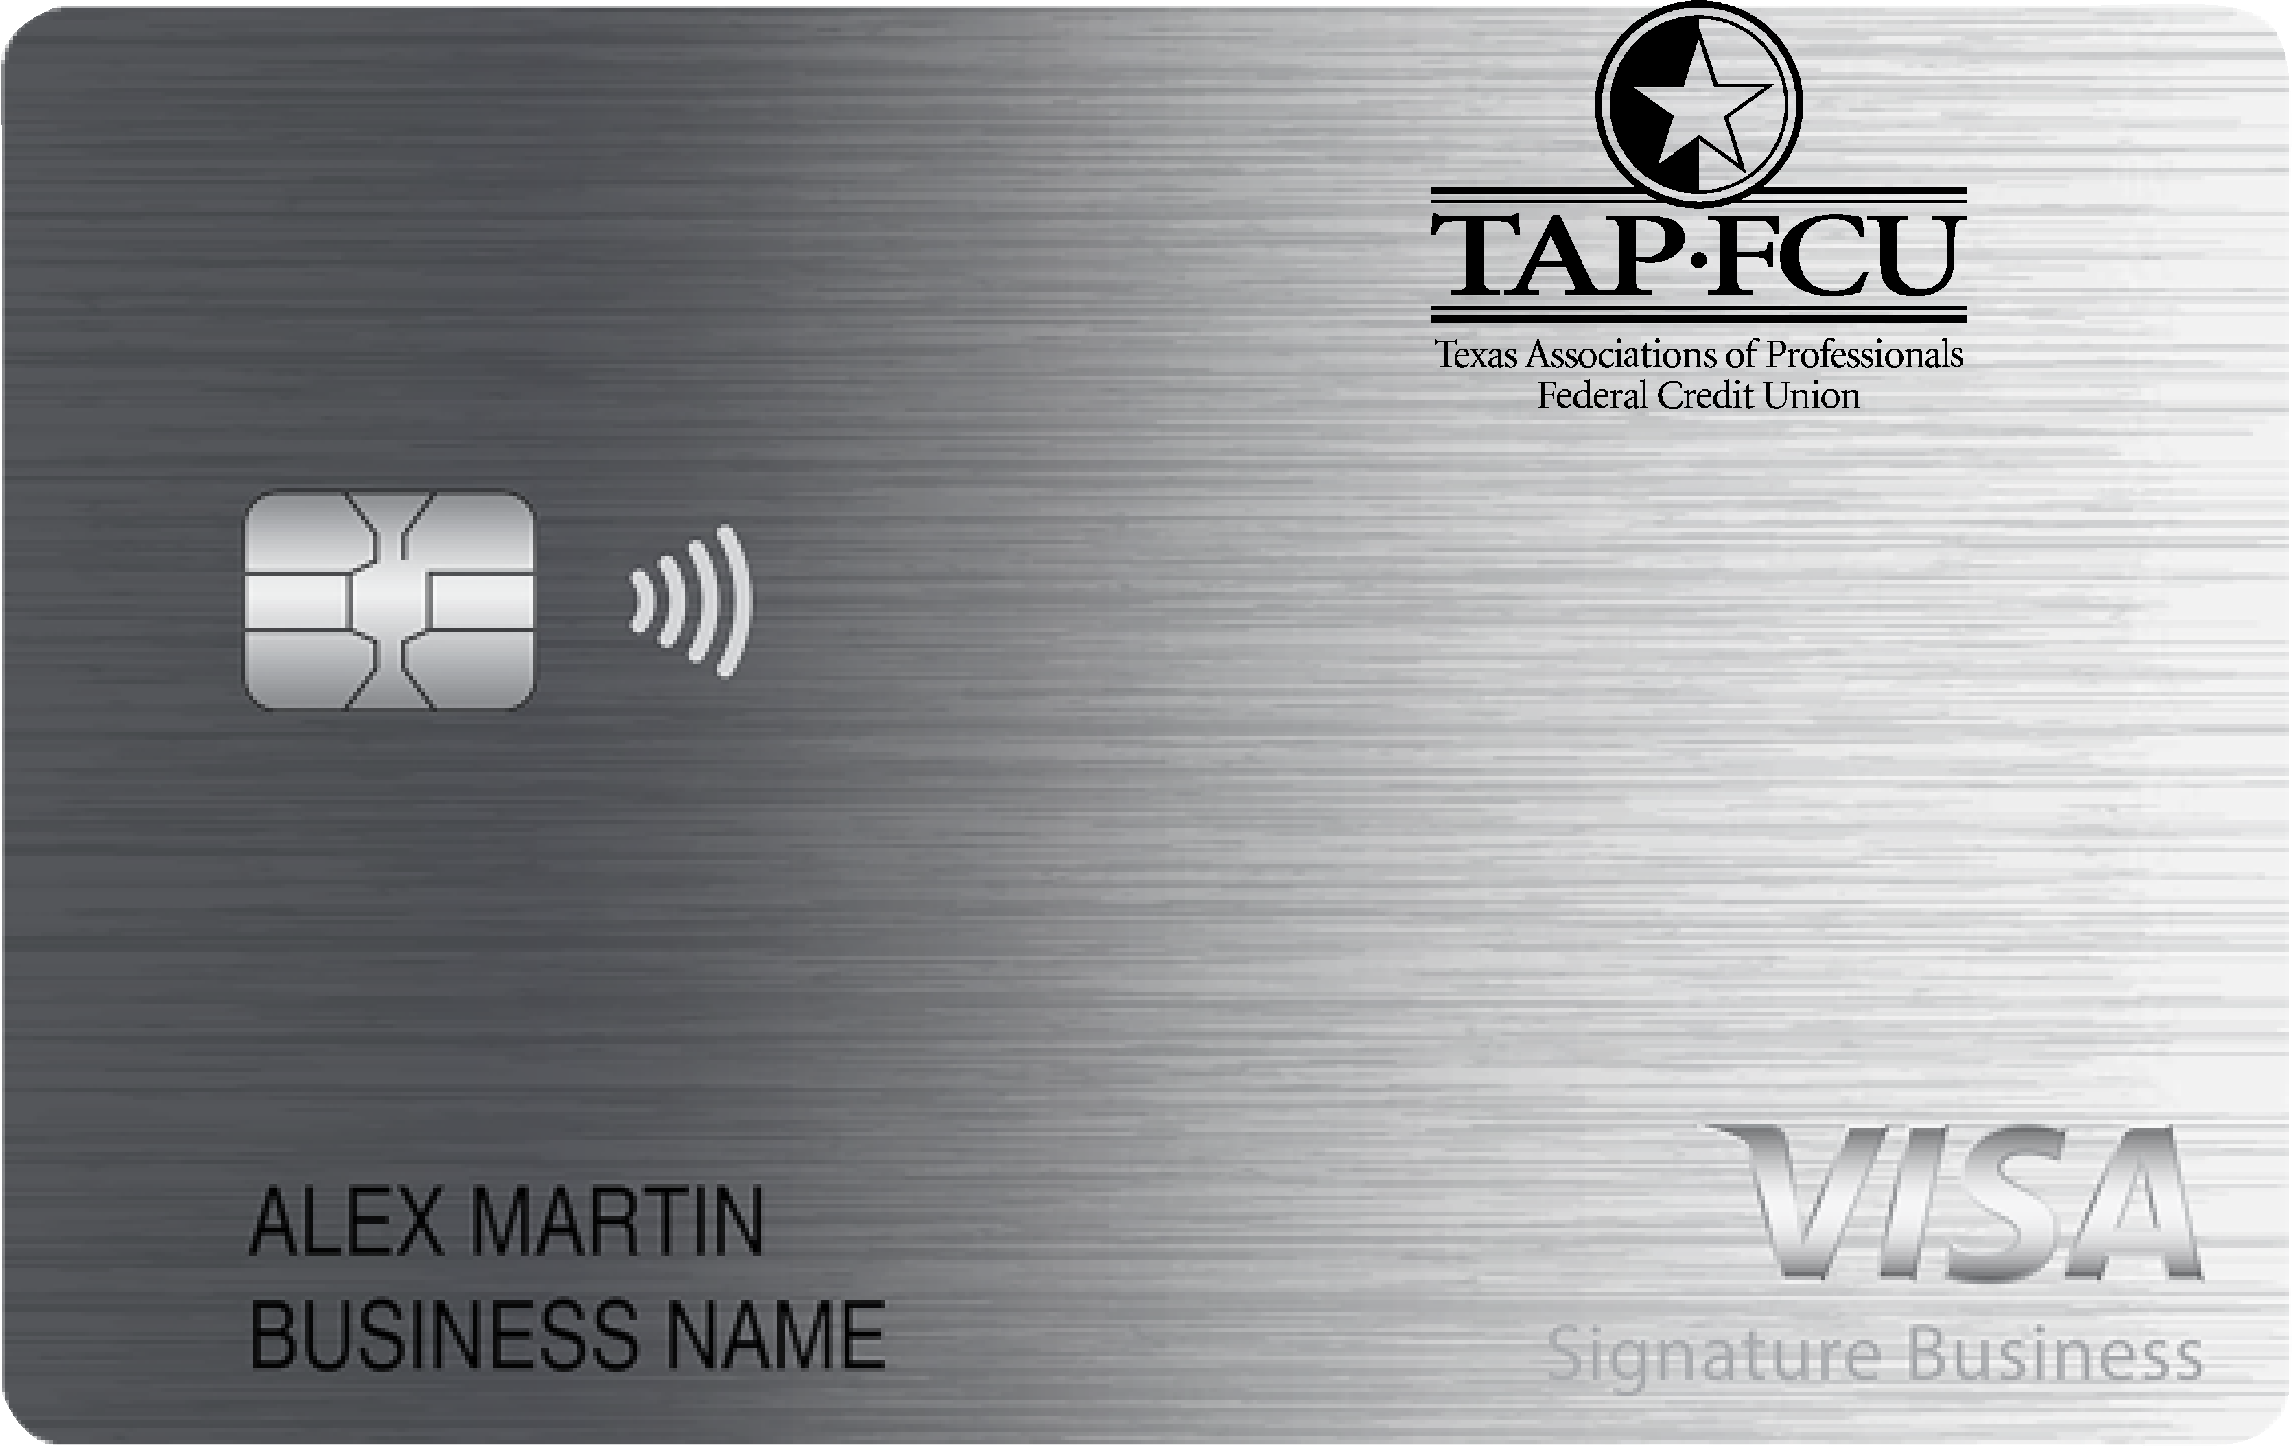 TAP FCU Smart Business Rewards Card